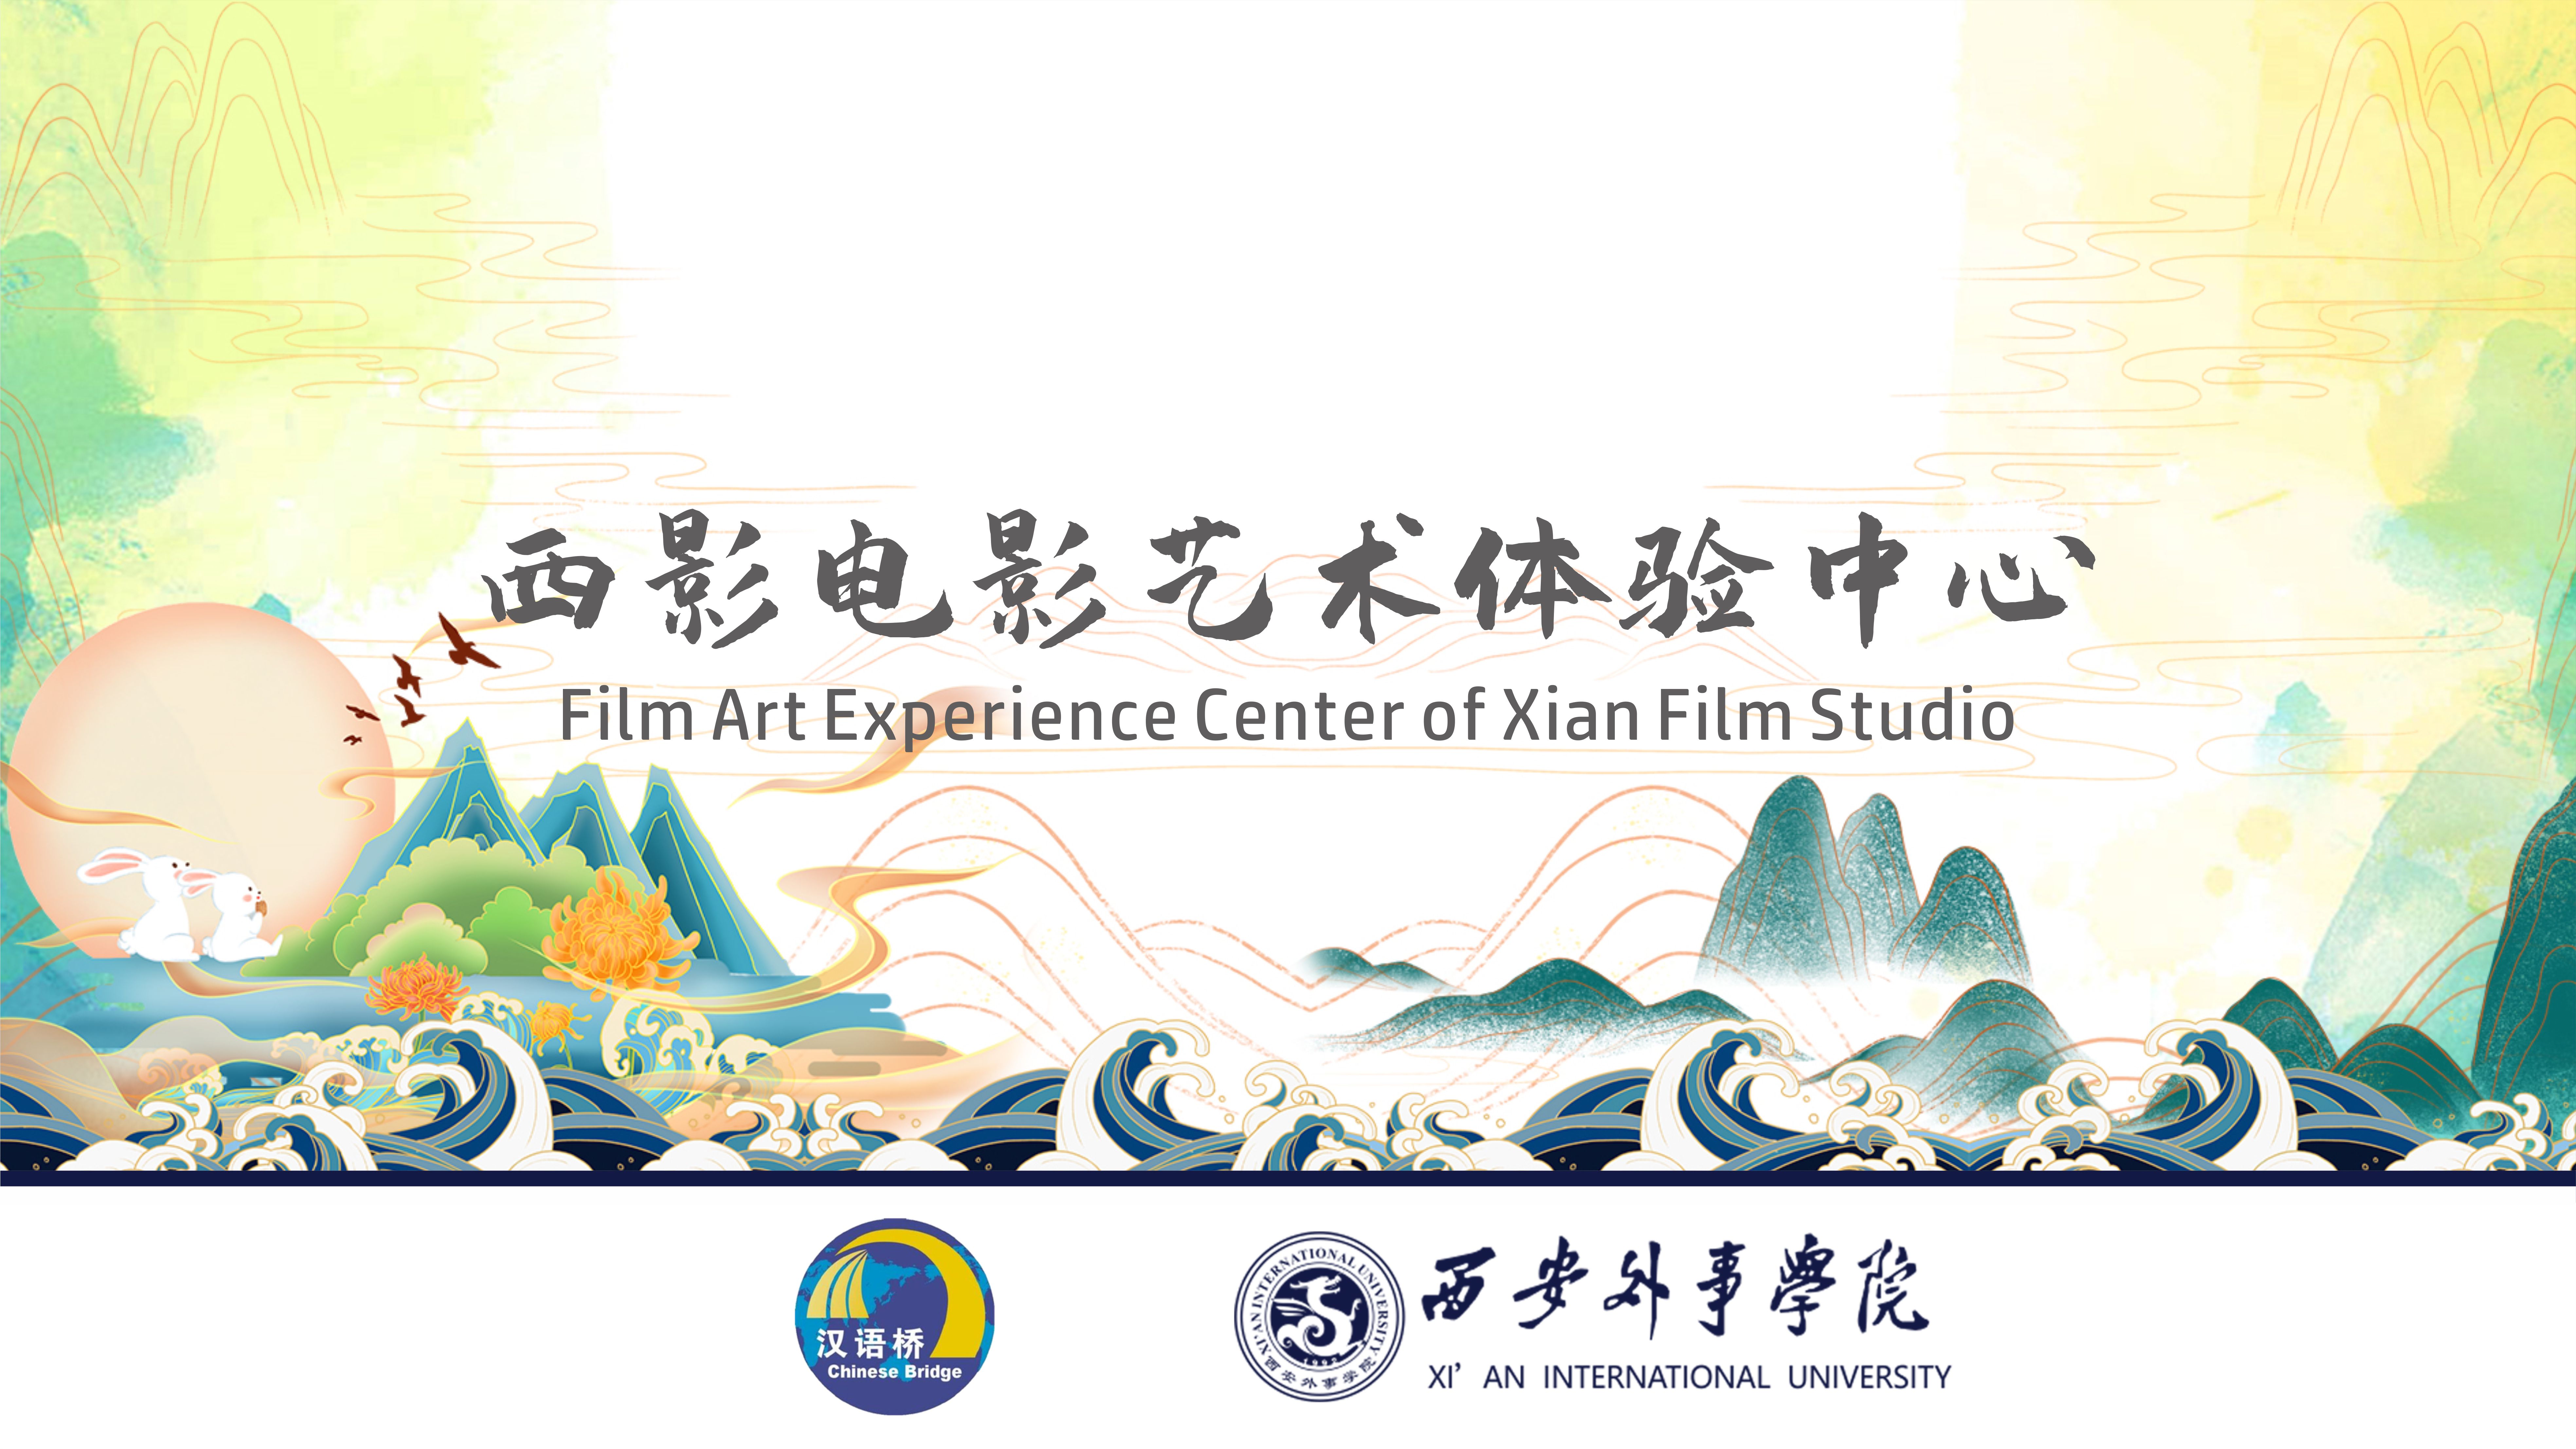 Film Art Experience Center of Xian Film Studio